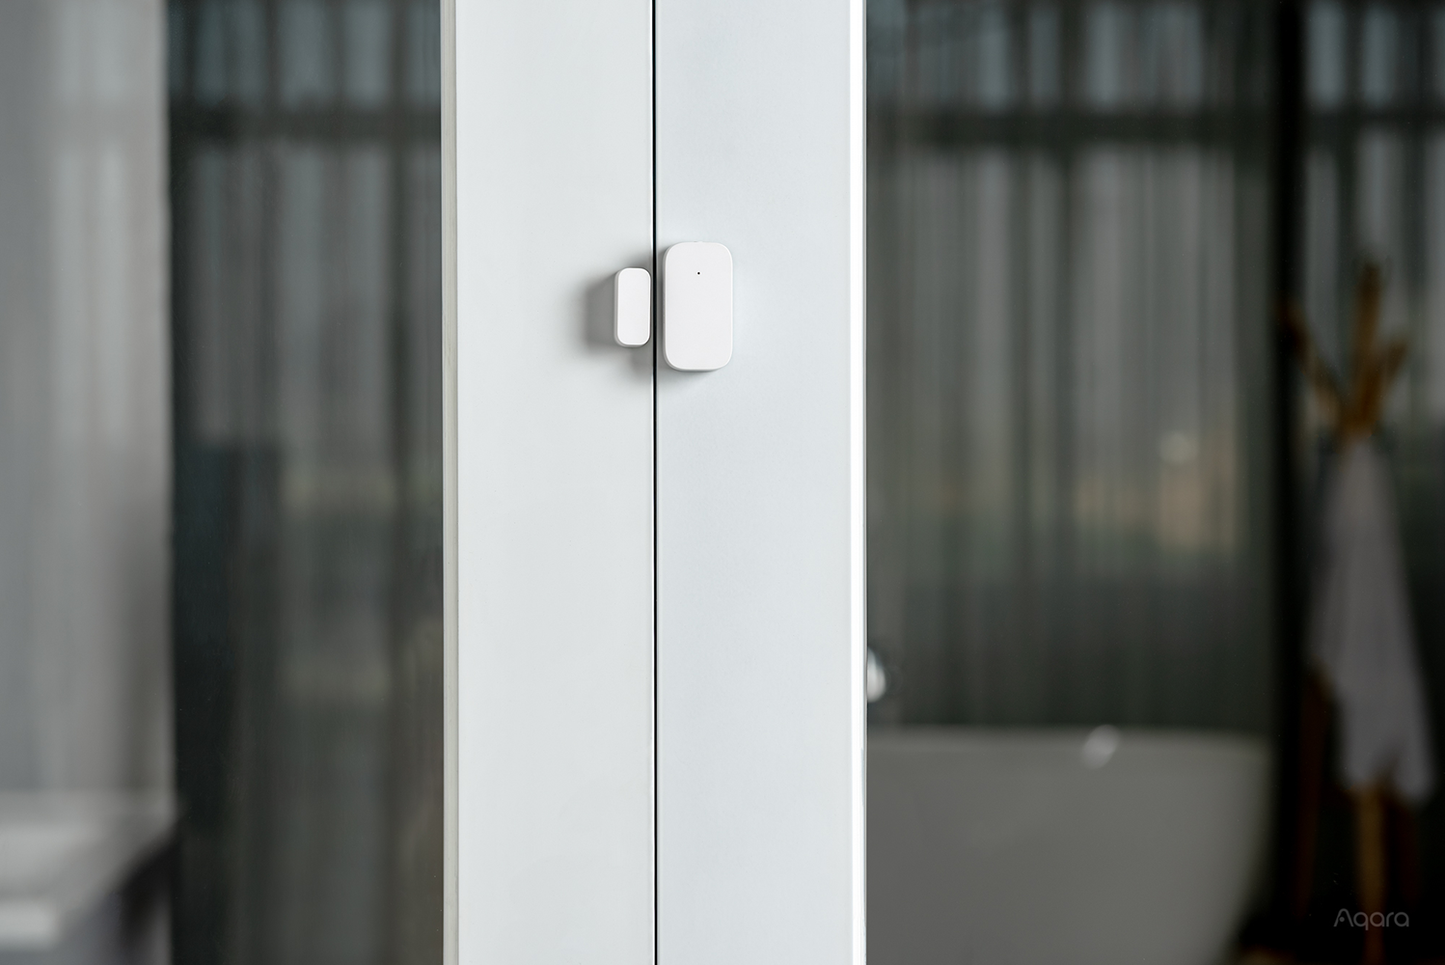 Aqara Door Contact and Window Sensor